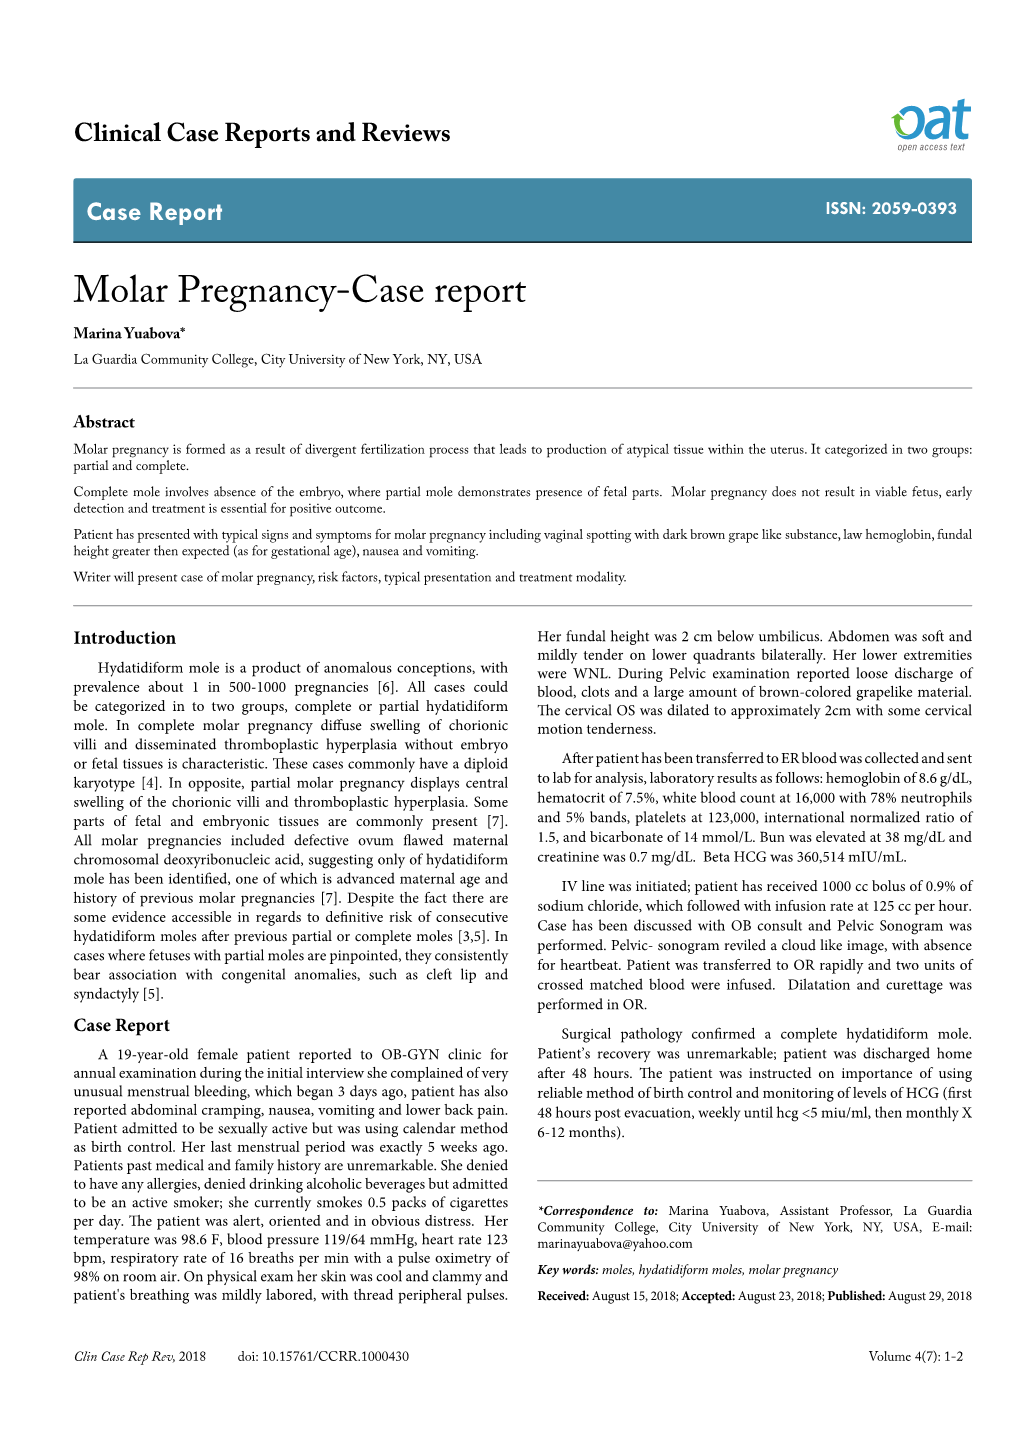 Molar Pregnancy-Case Report Marina Yuabova* La Guardia Community College, City University of New York, NY, USA